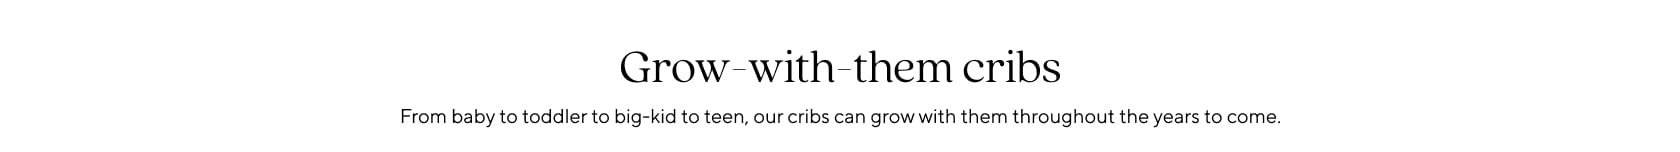 grow-with-them cribs